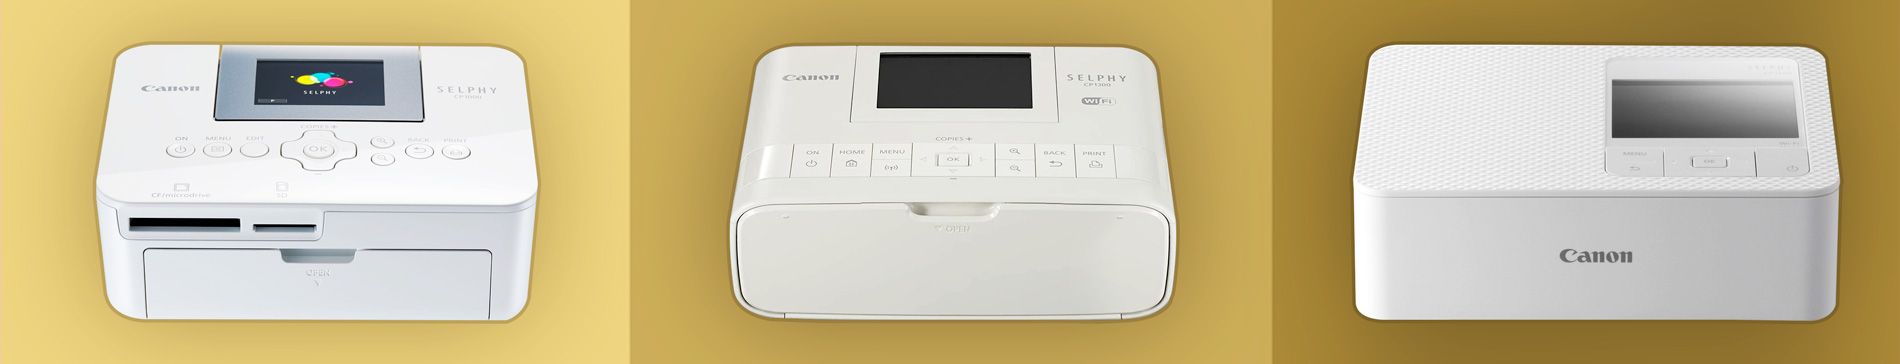 imprimantes-portables-canon-selphy